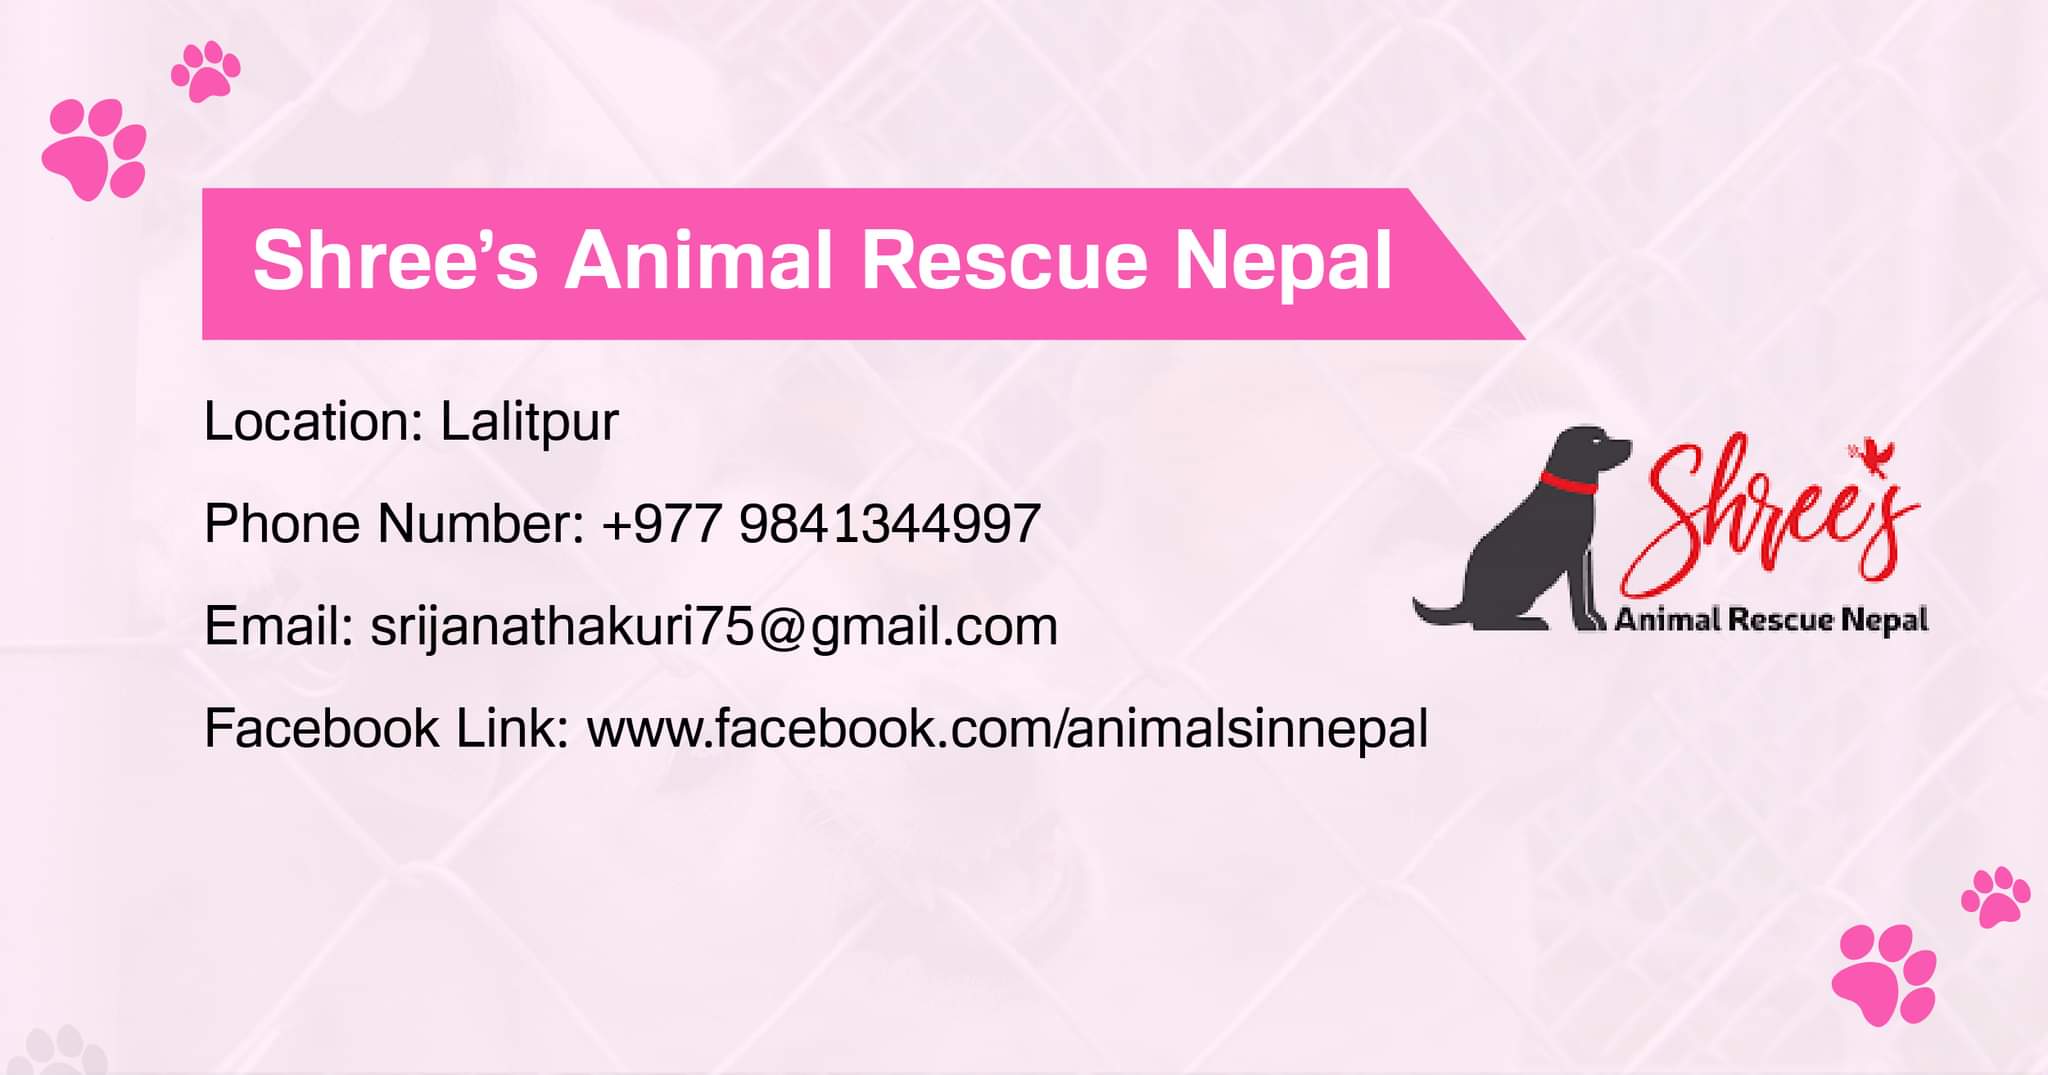 Shree's Animal Rescue Nepal